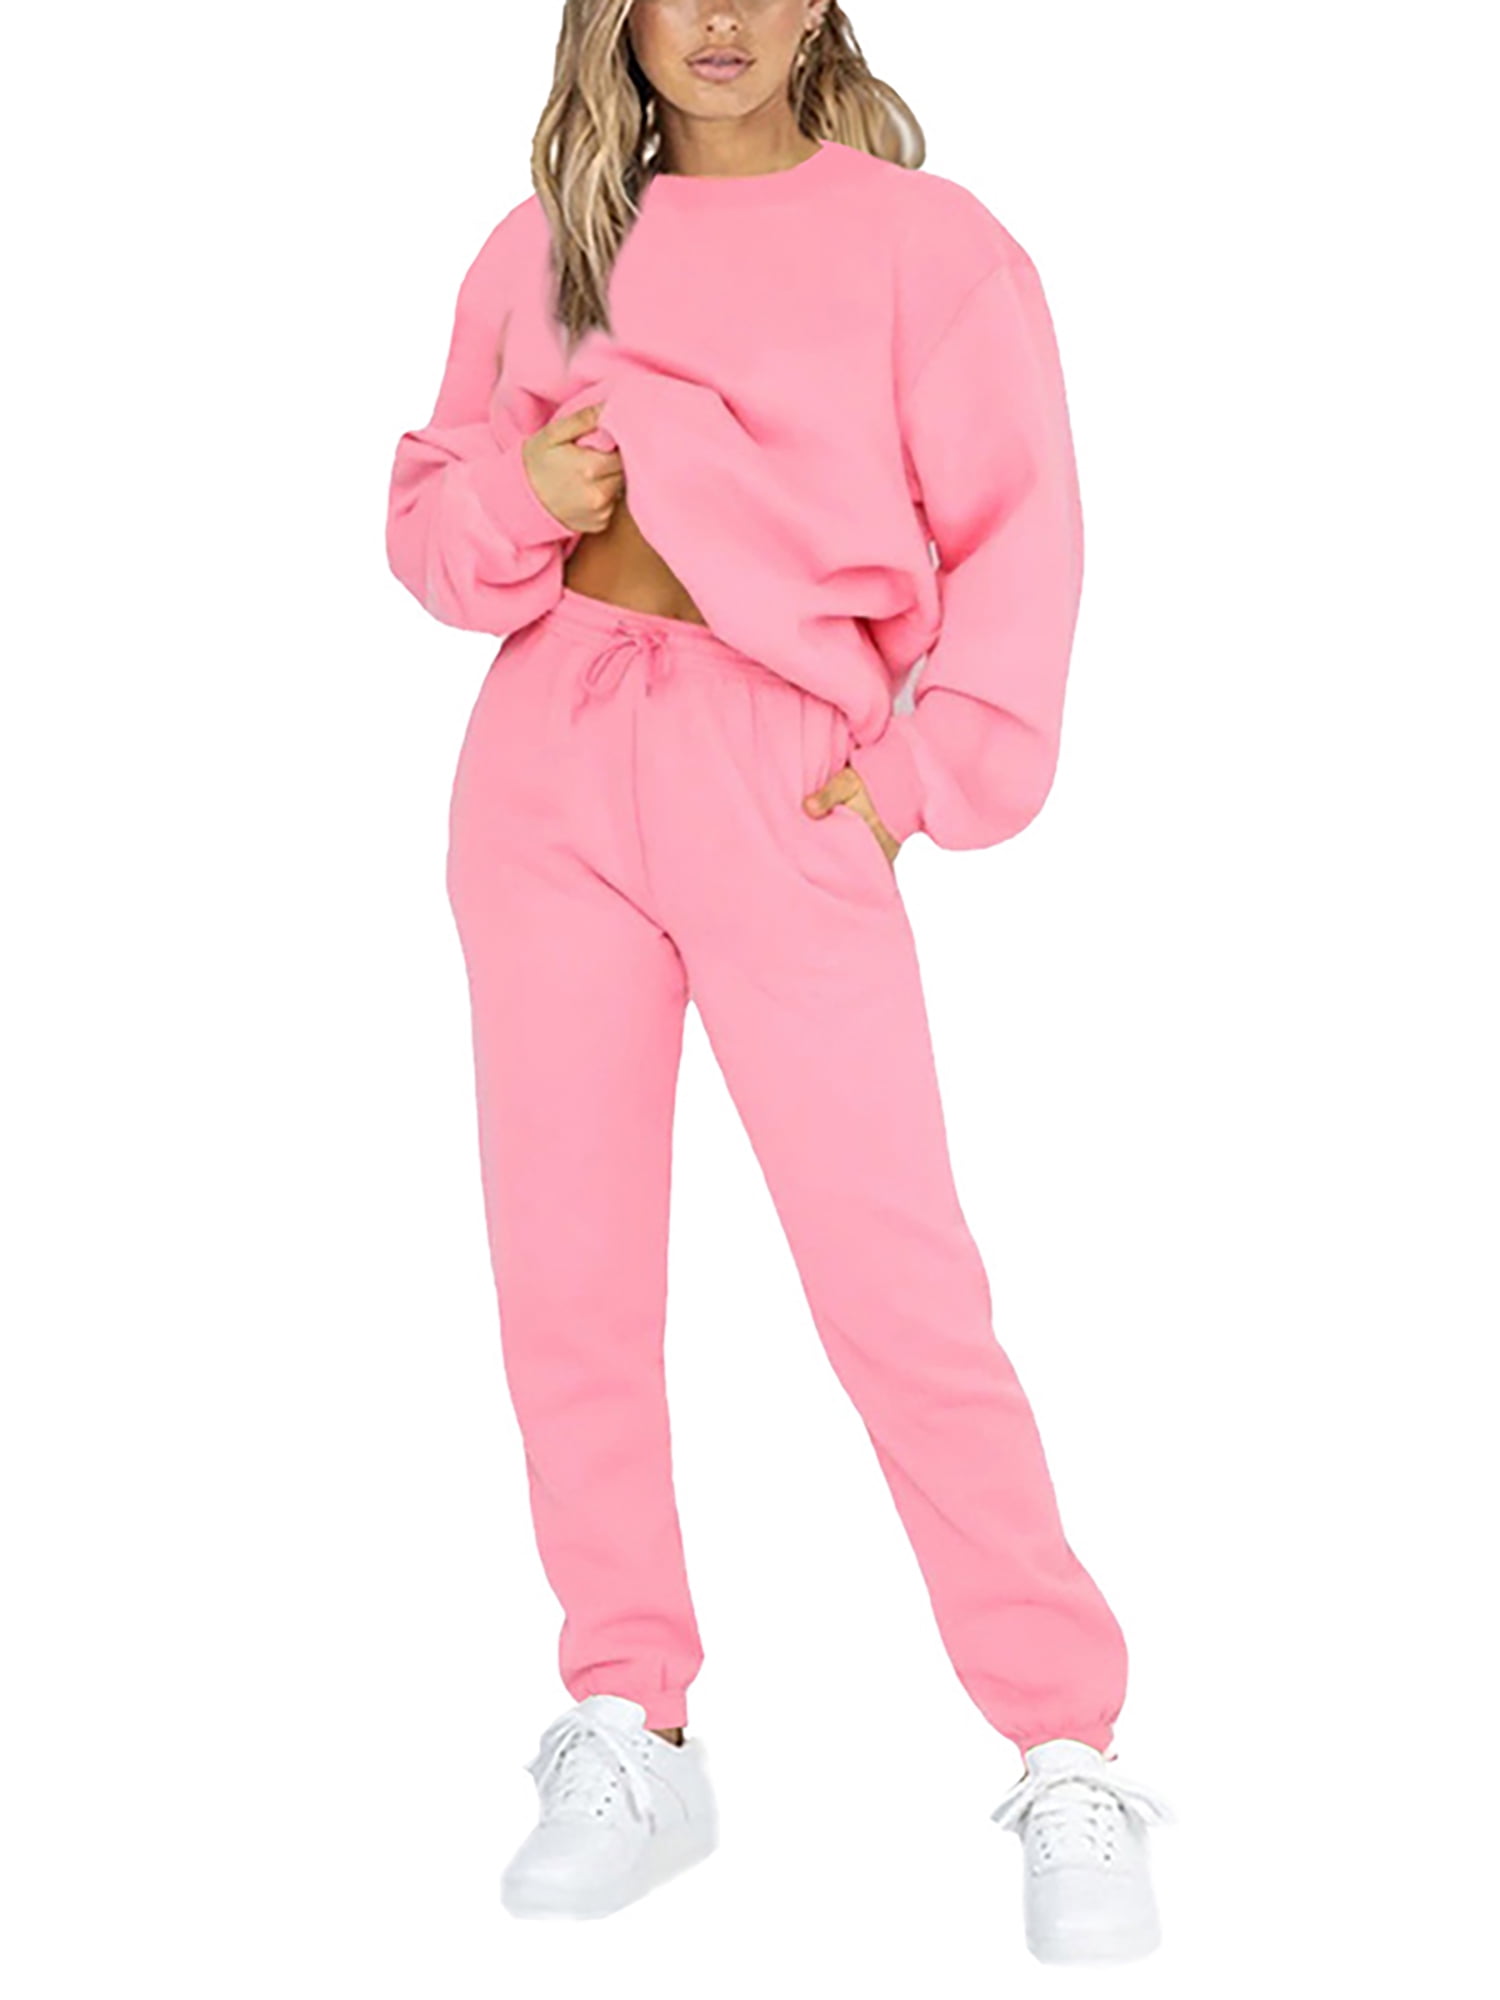 Female Jogging Suits (Pink)